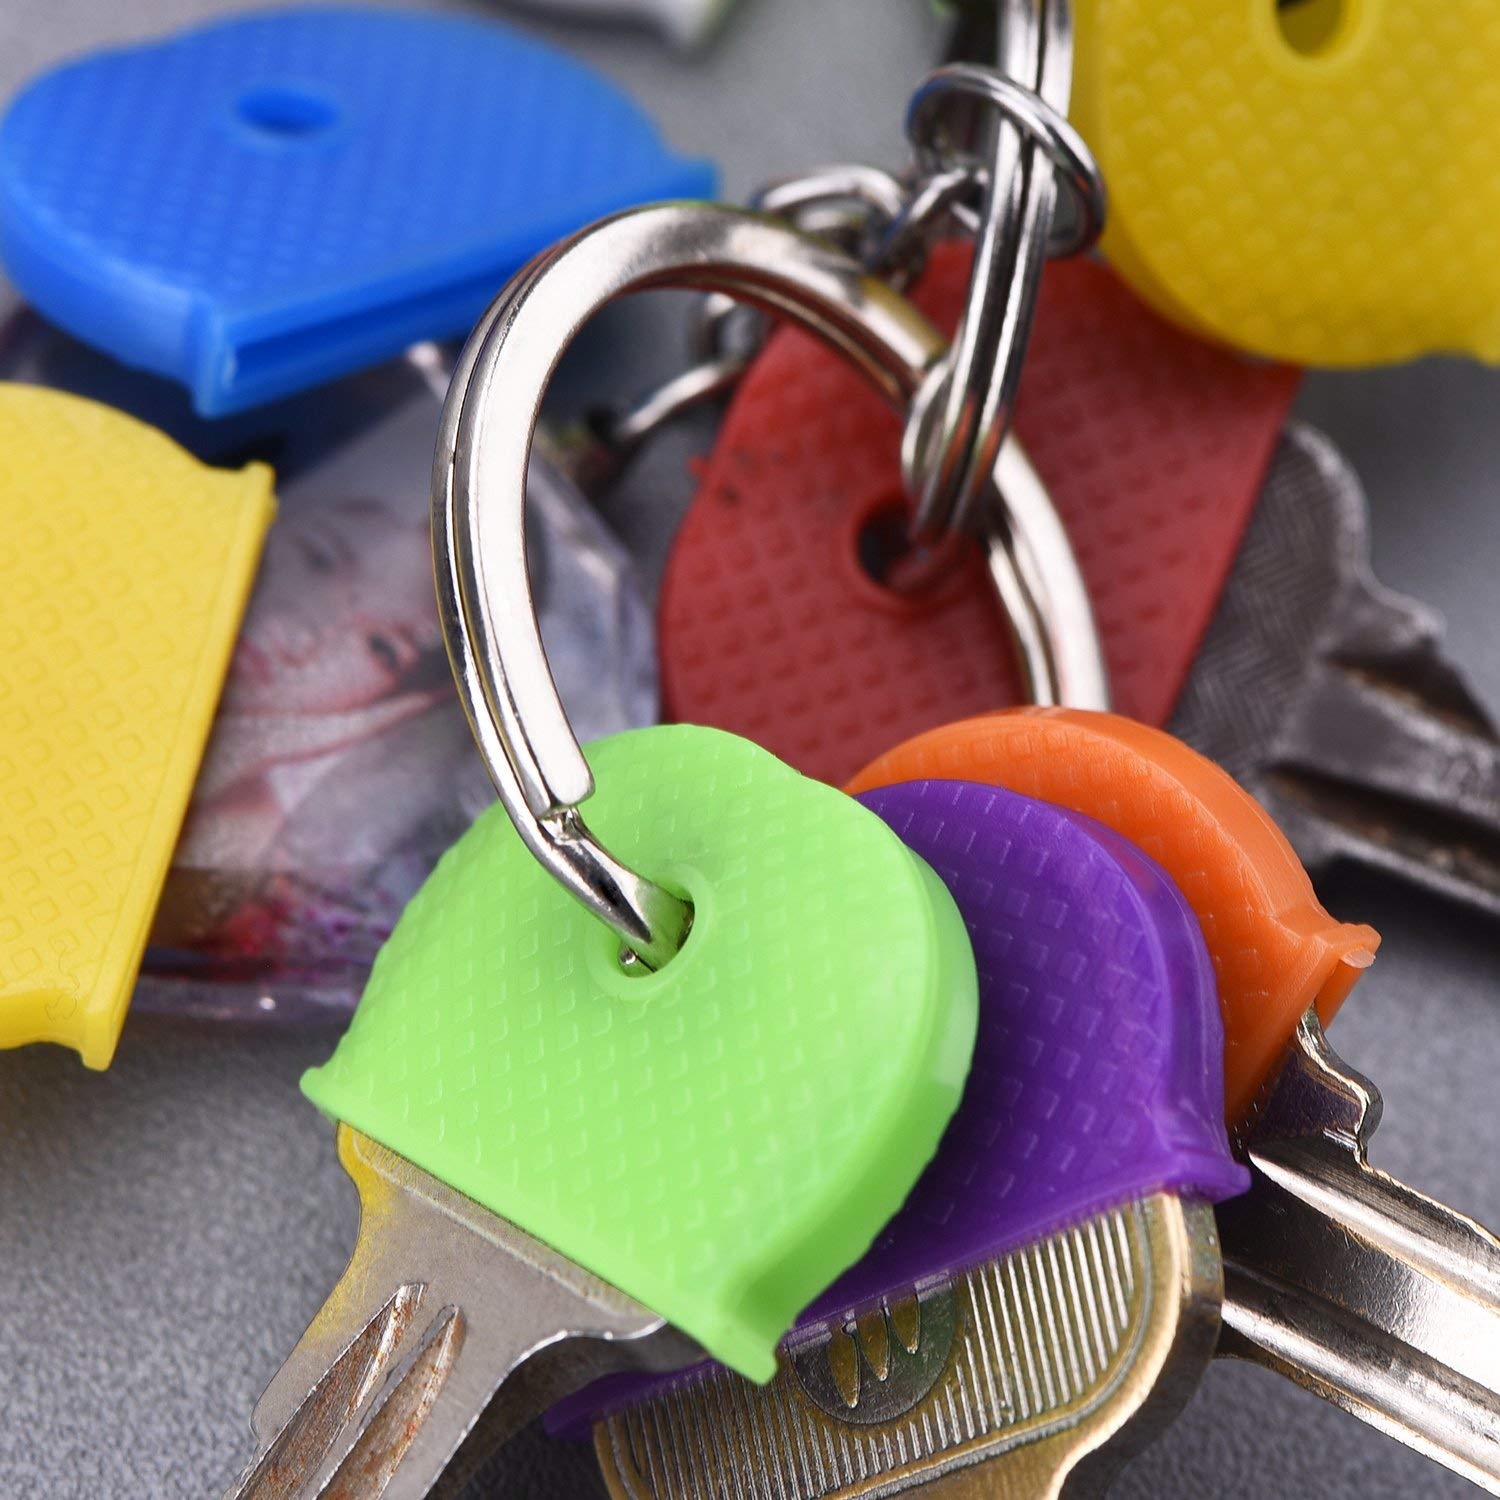 24 Key Caps With Flexible Key Cover For Easy Identification Of Door Keys, Multicolor - ebowsos